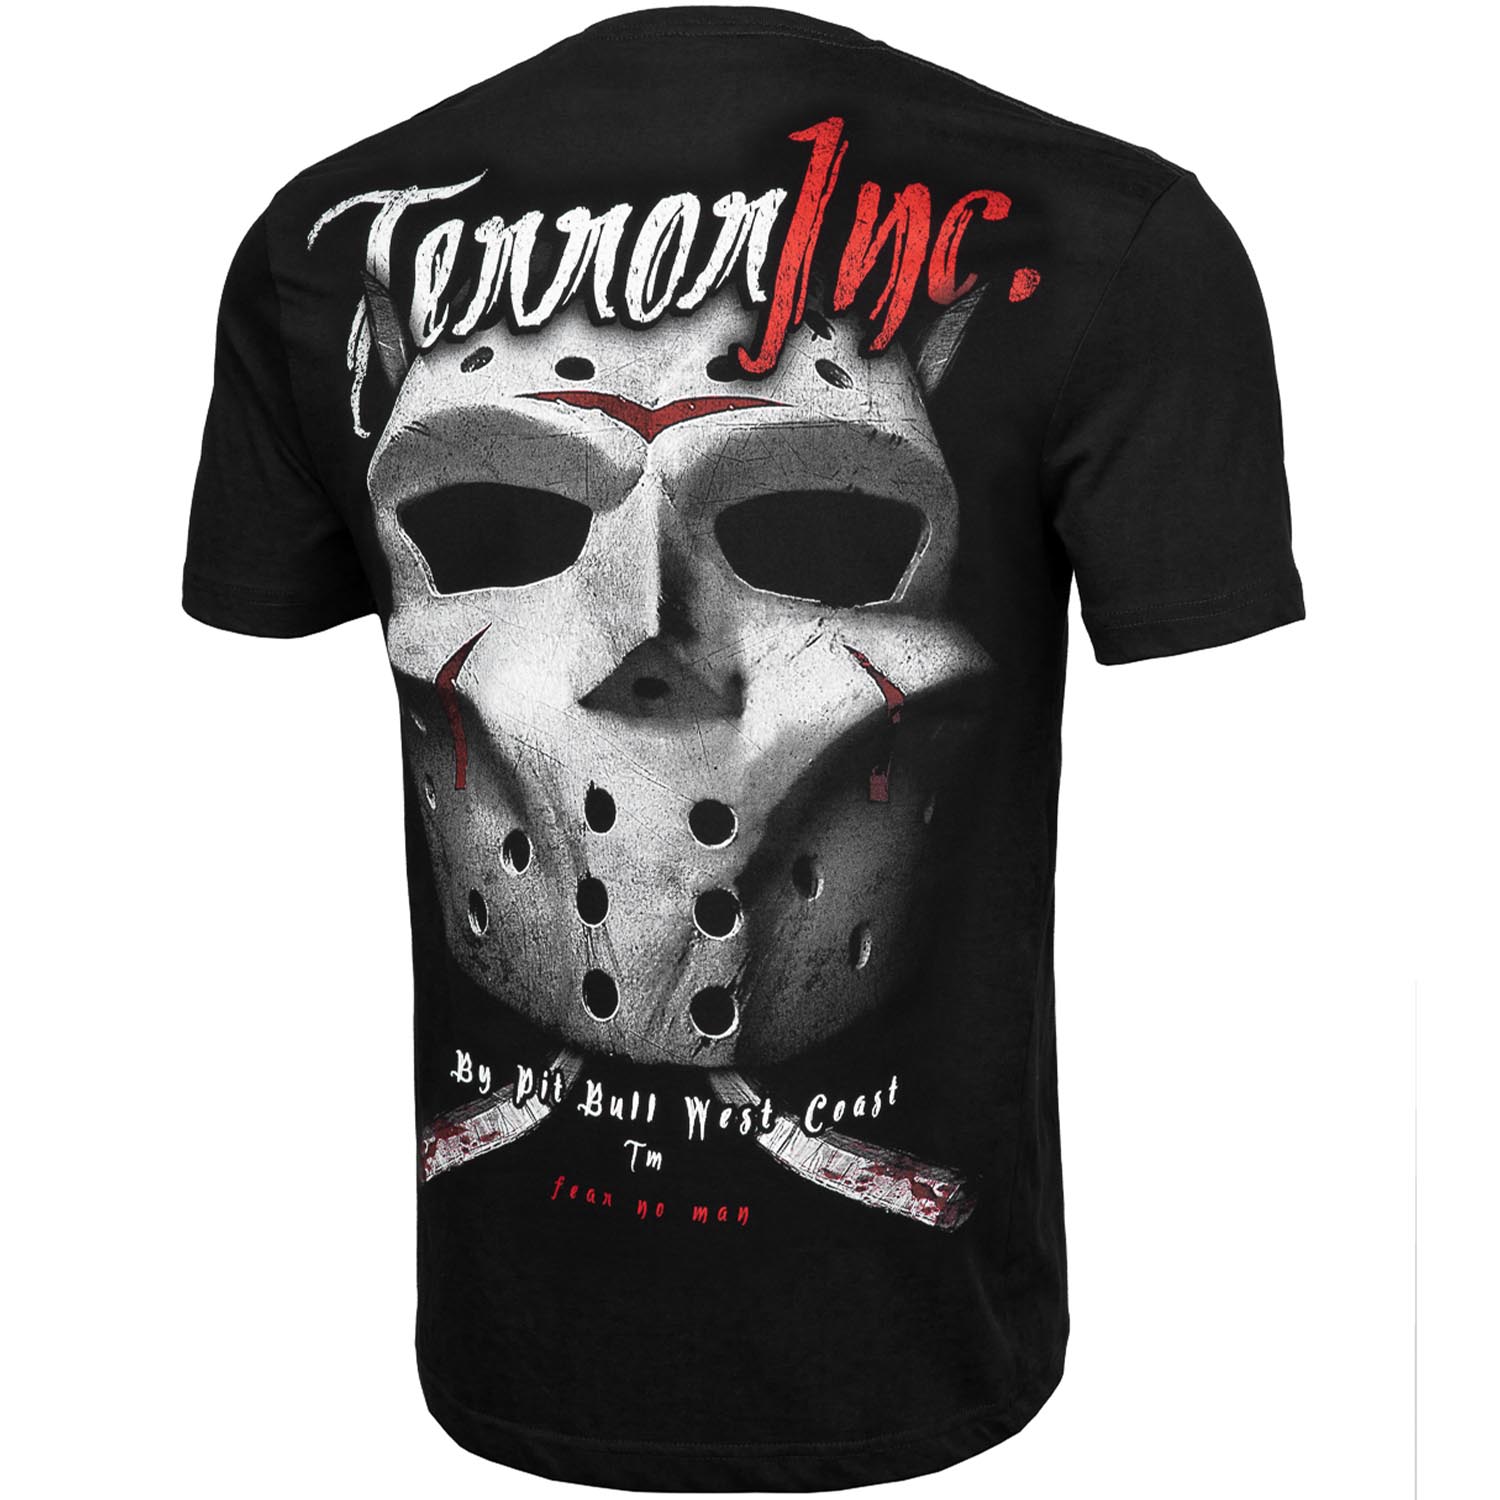 Pit Bull West Coast T-Shirt, Terror Mask 3, schwarz